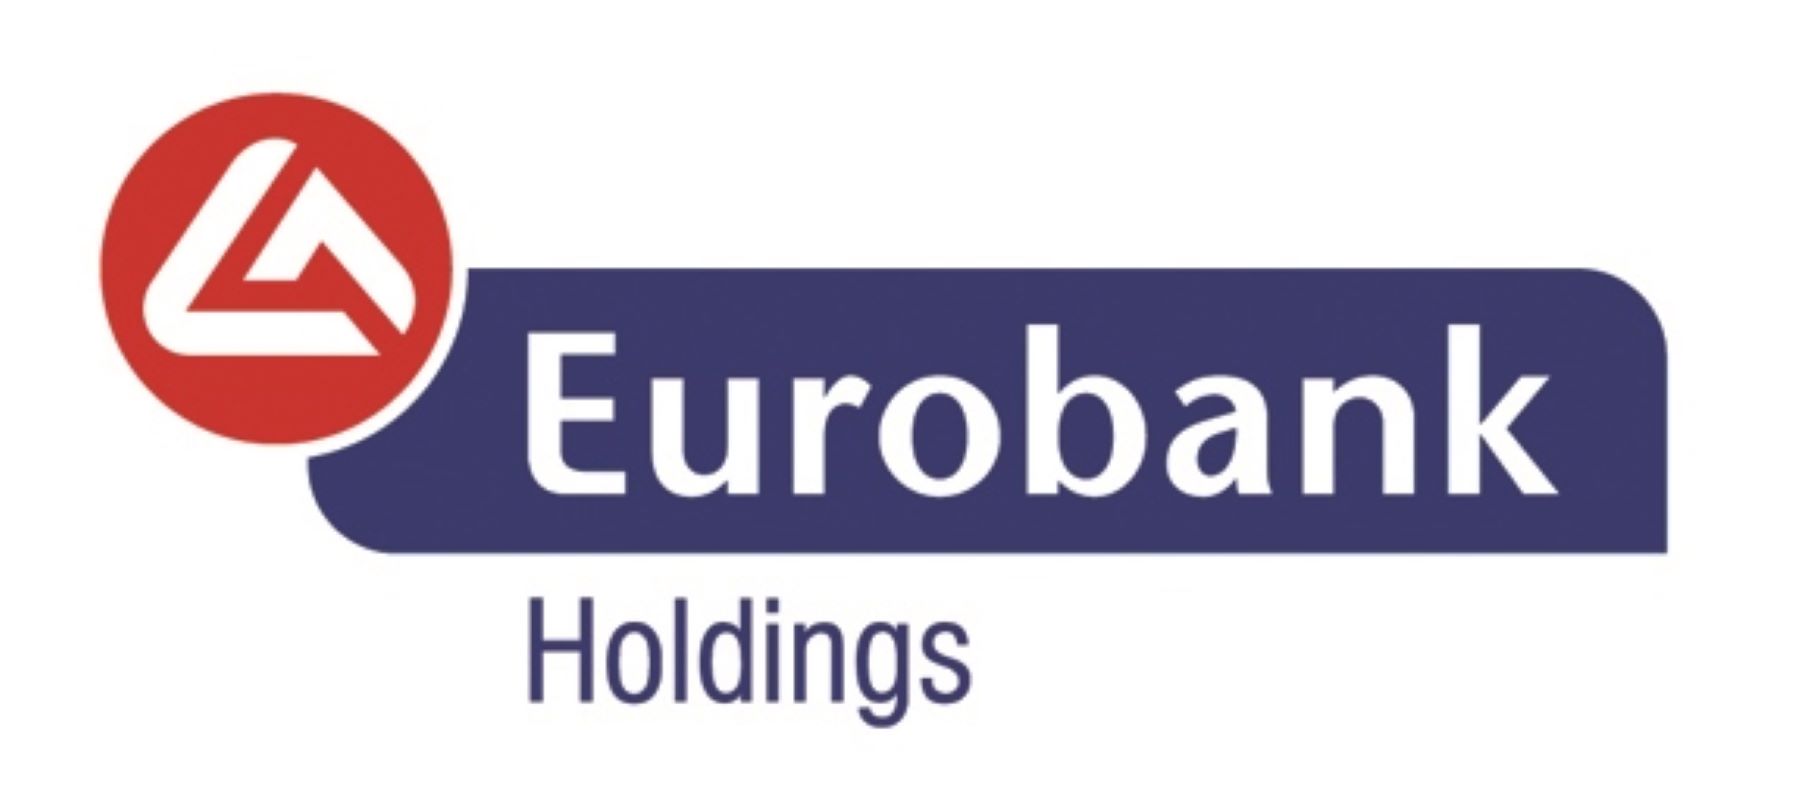 Eurobank: Υπέγραψε με τον Όμιλο doValue